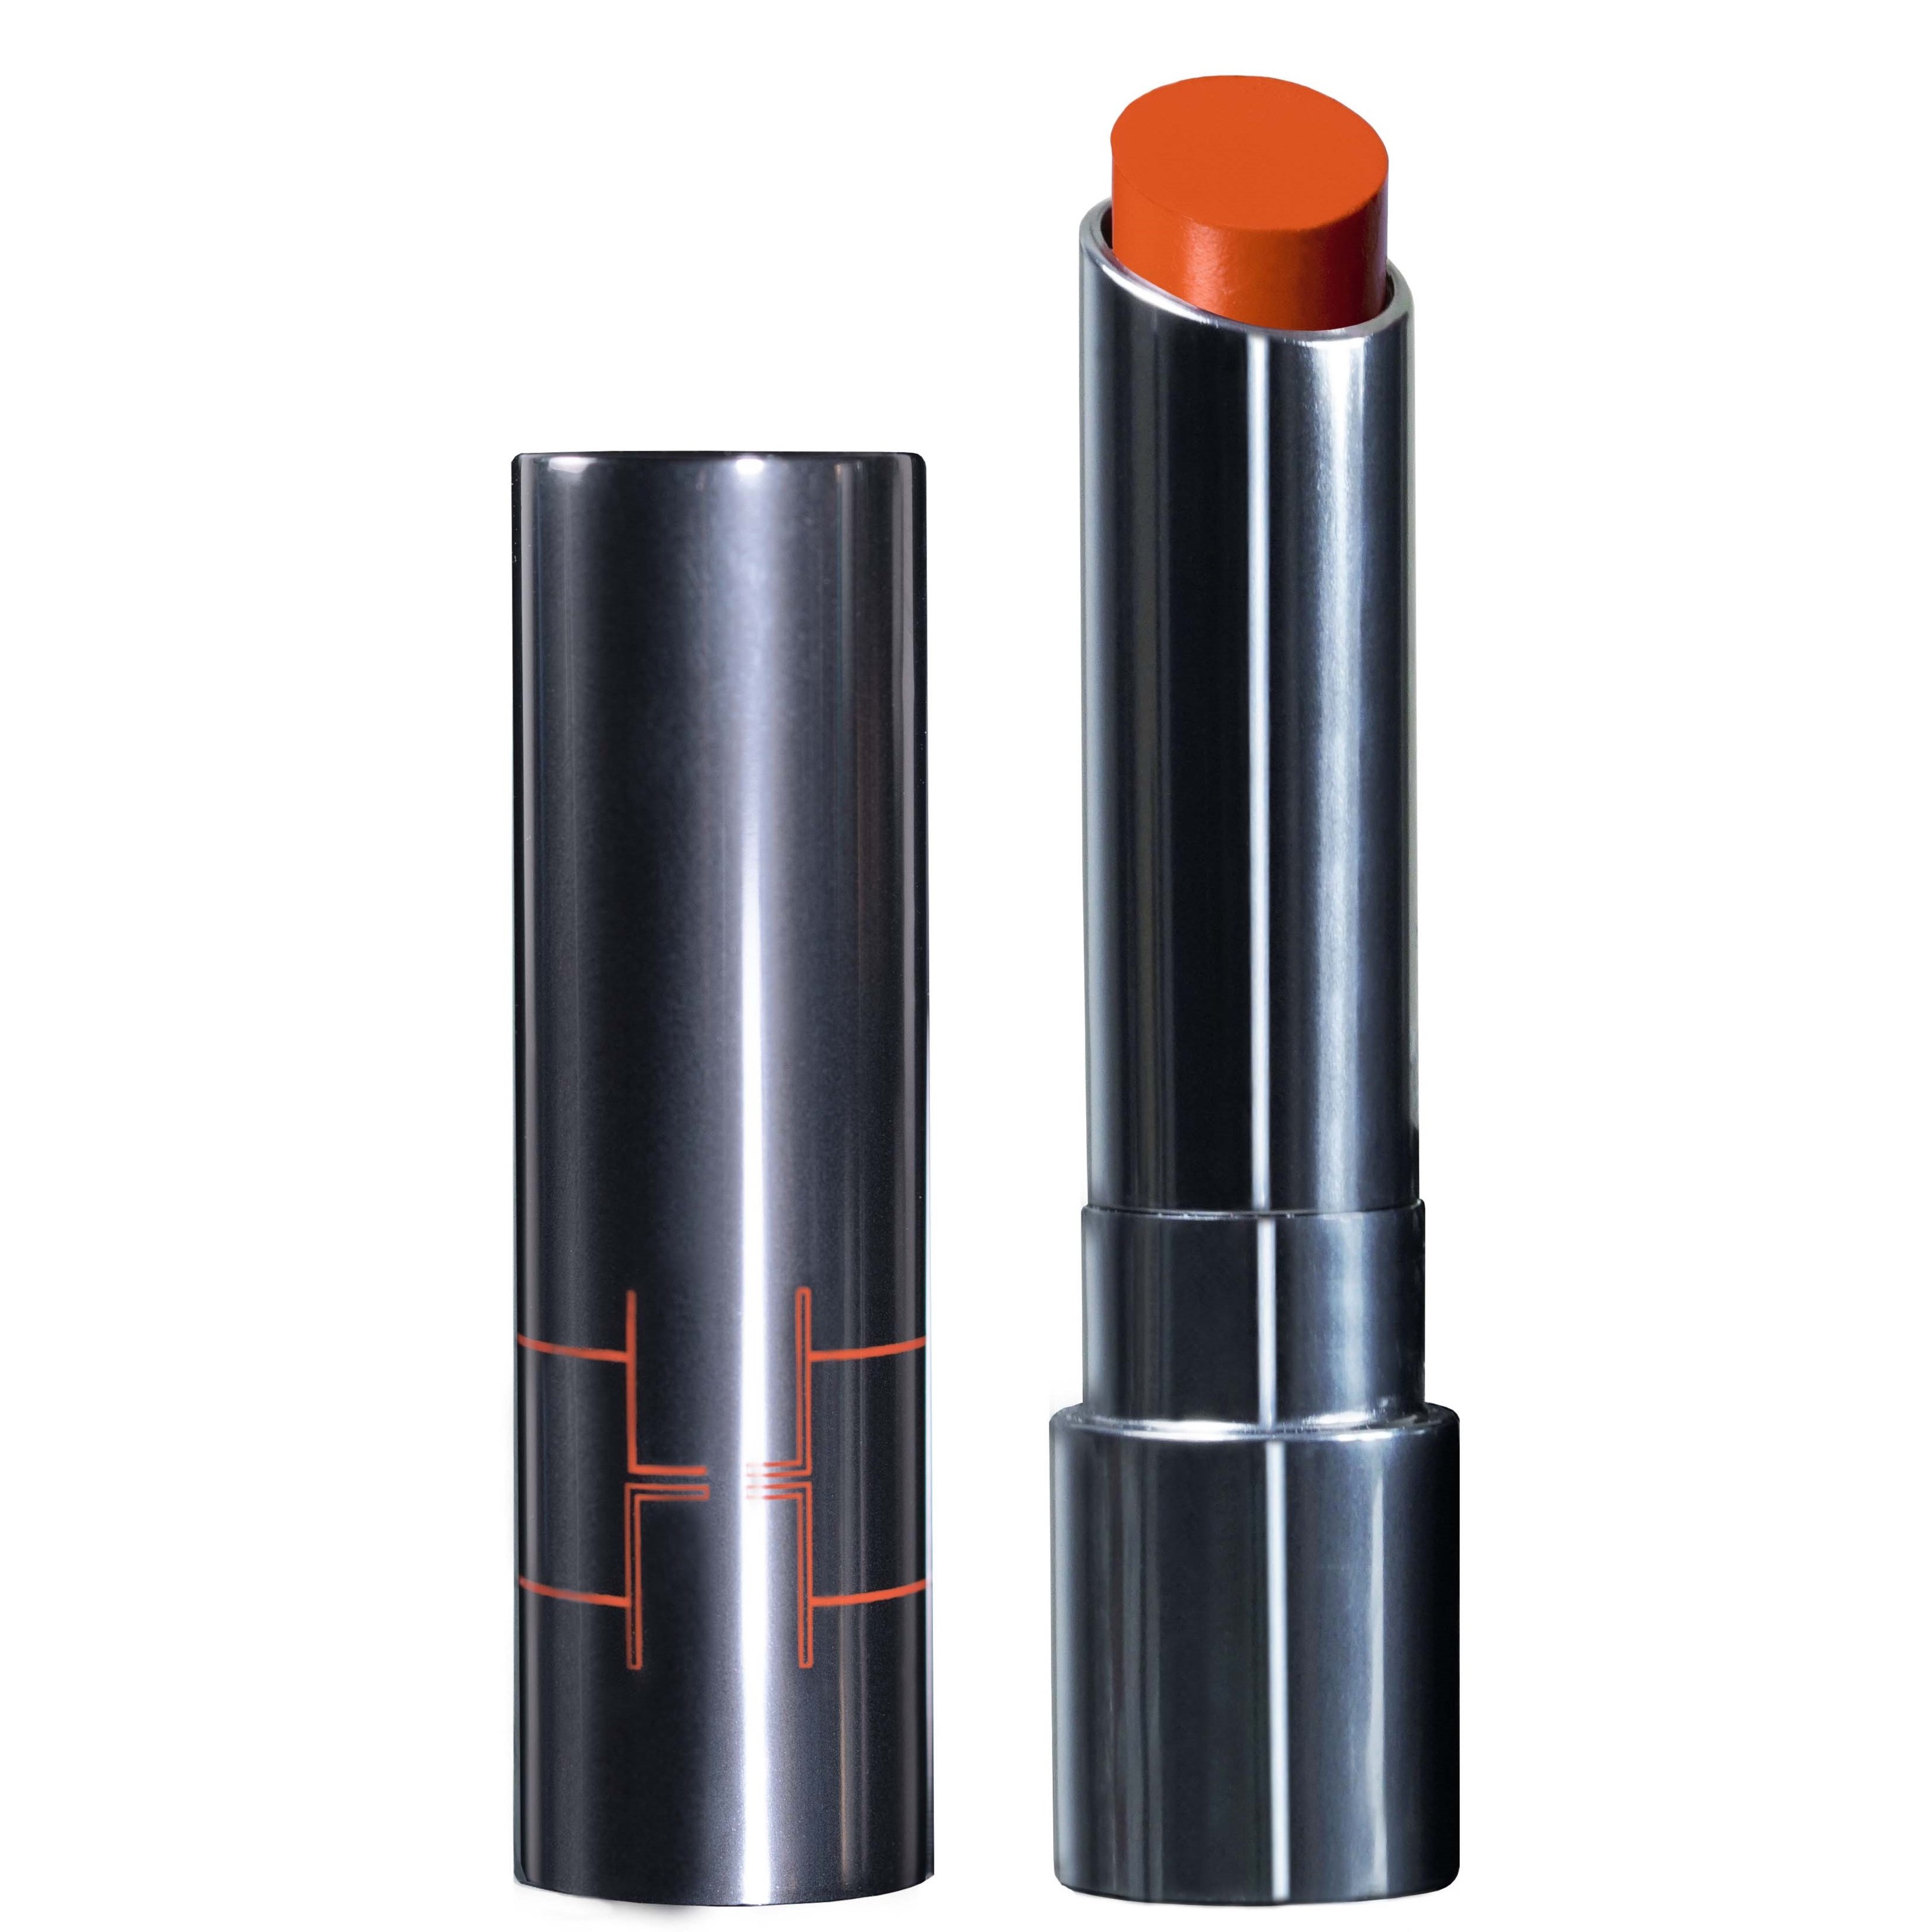 LH cosmetics Fantastick Multi-use Lipstick SPF15 Cultured